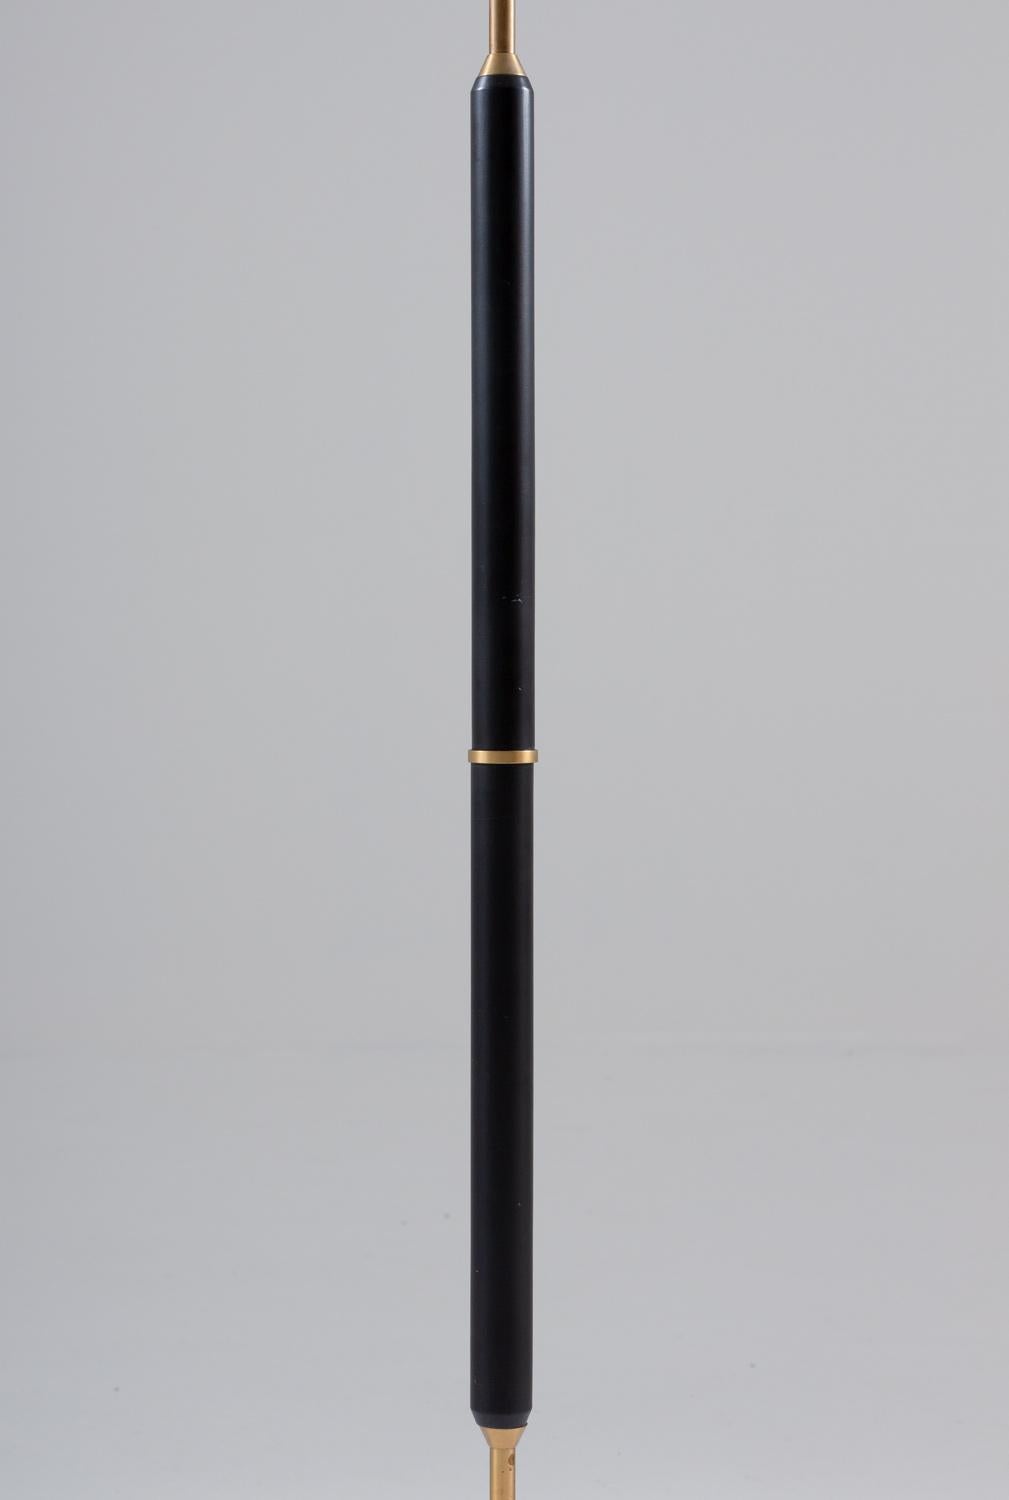 Scandinavian Midcentury Floor Lamps in Brass and Wood by Bergboms, Sweden For Sale 1